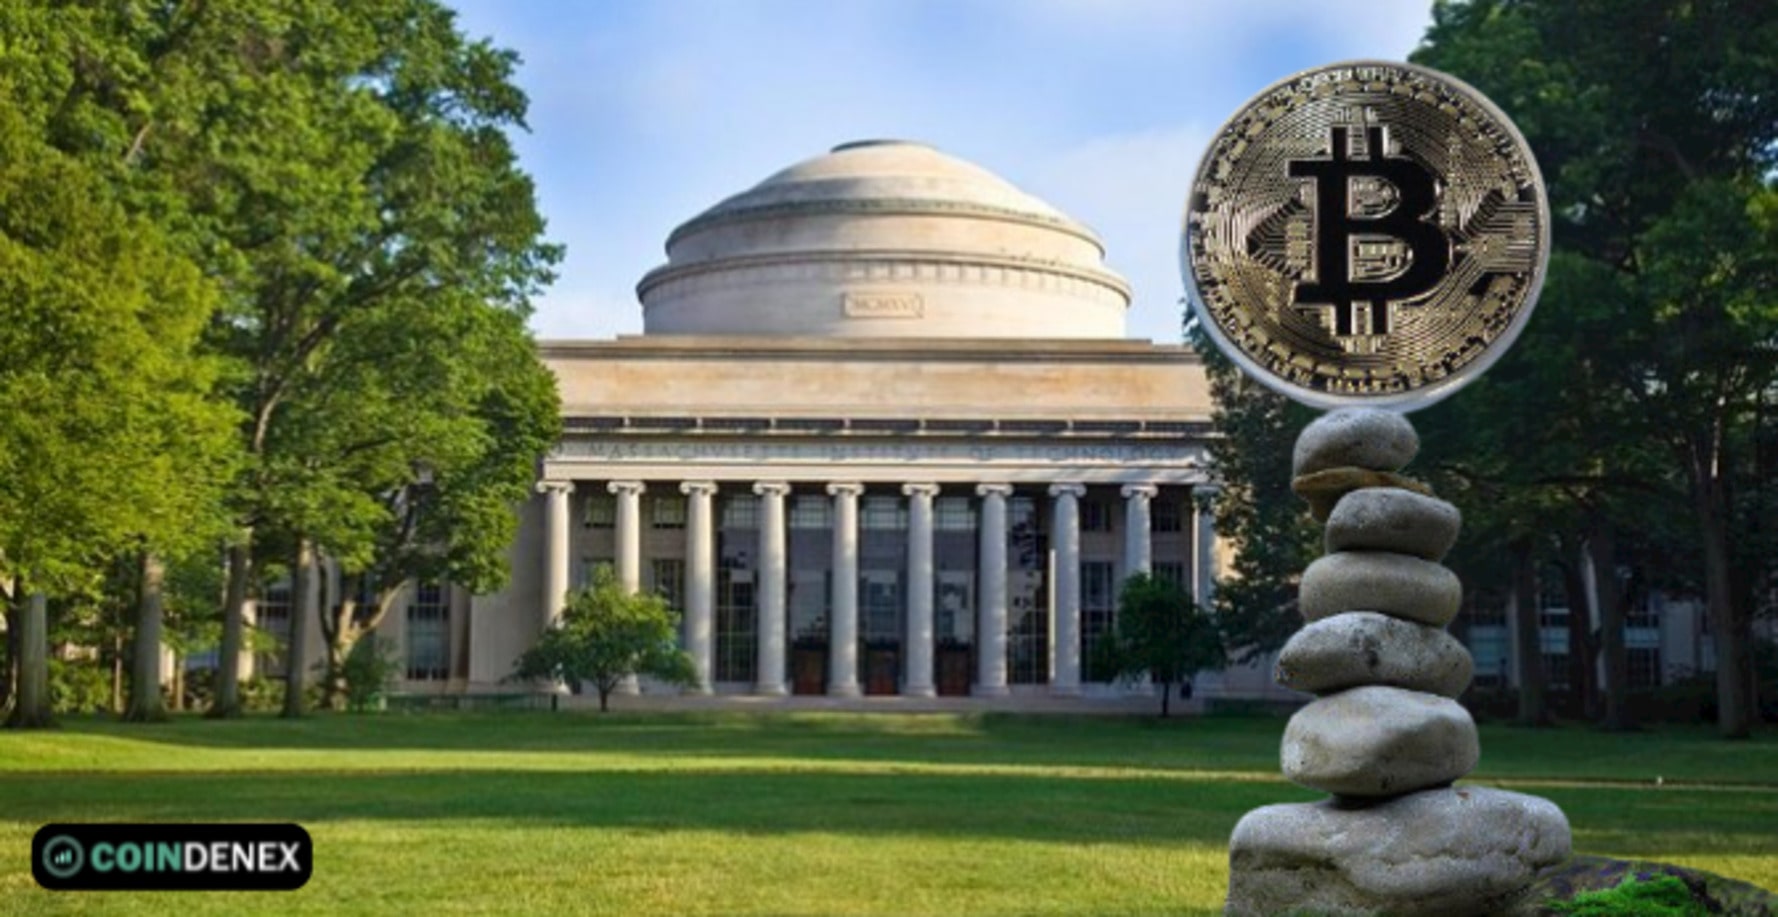 MIT Students That Got Free Bitcoin